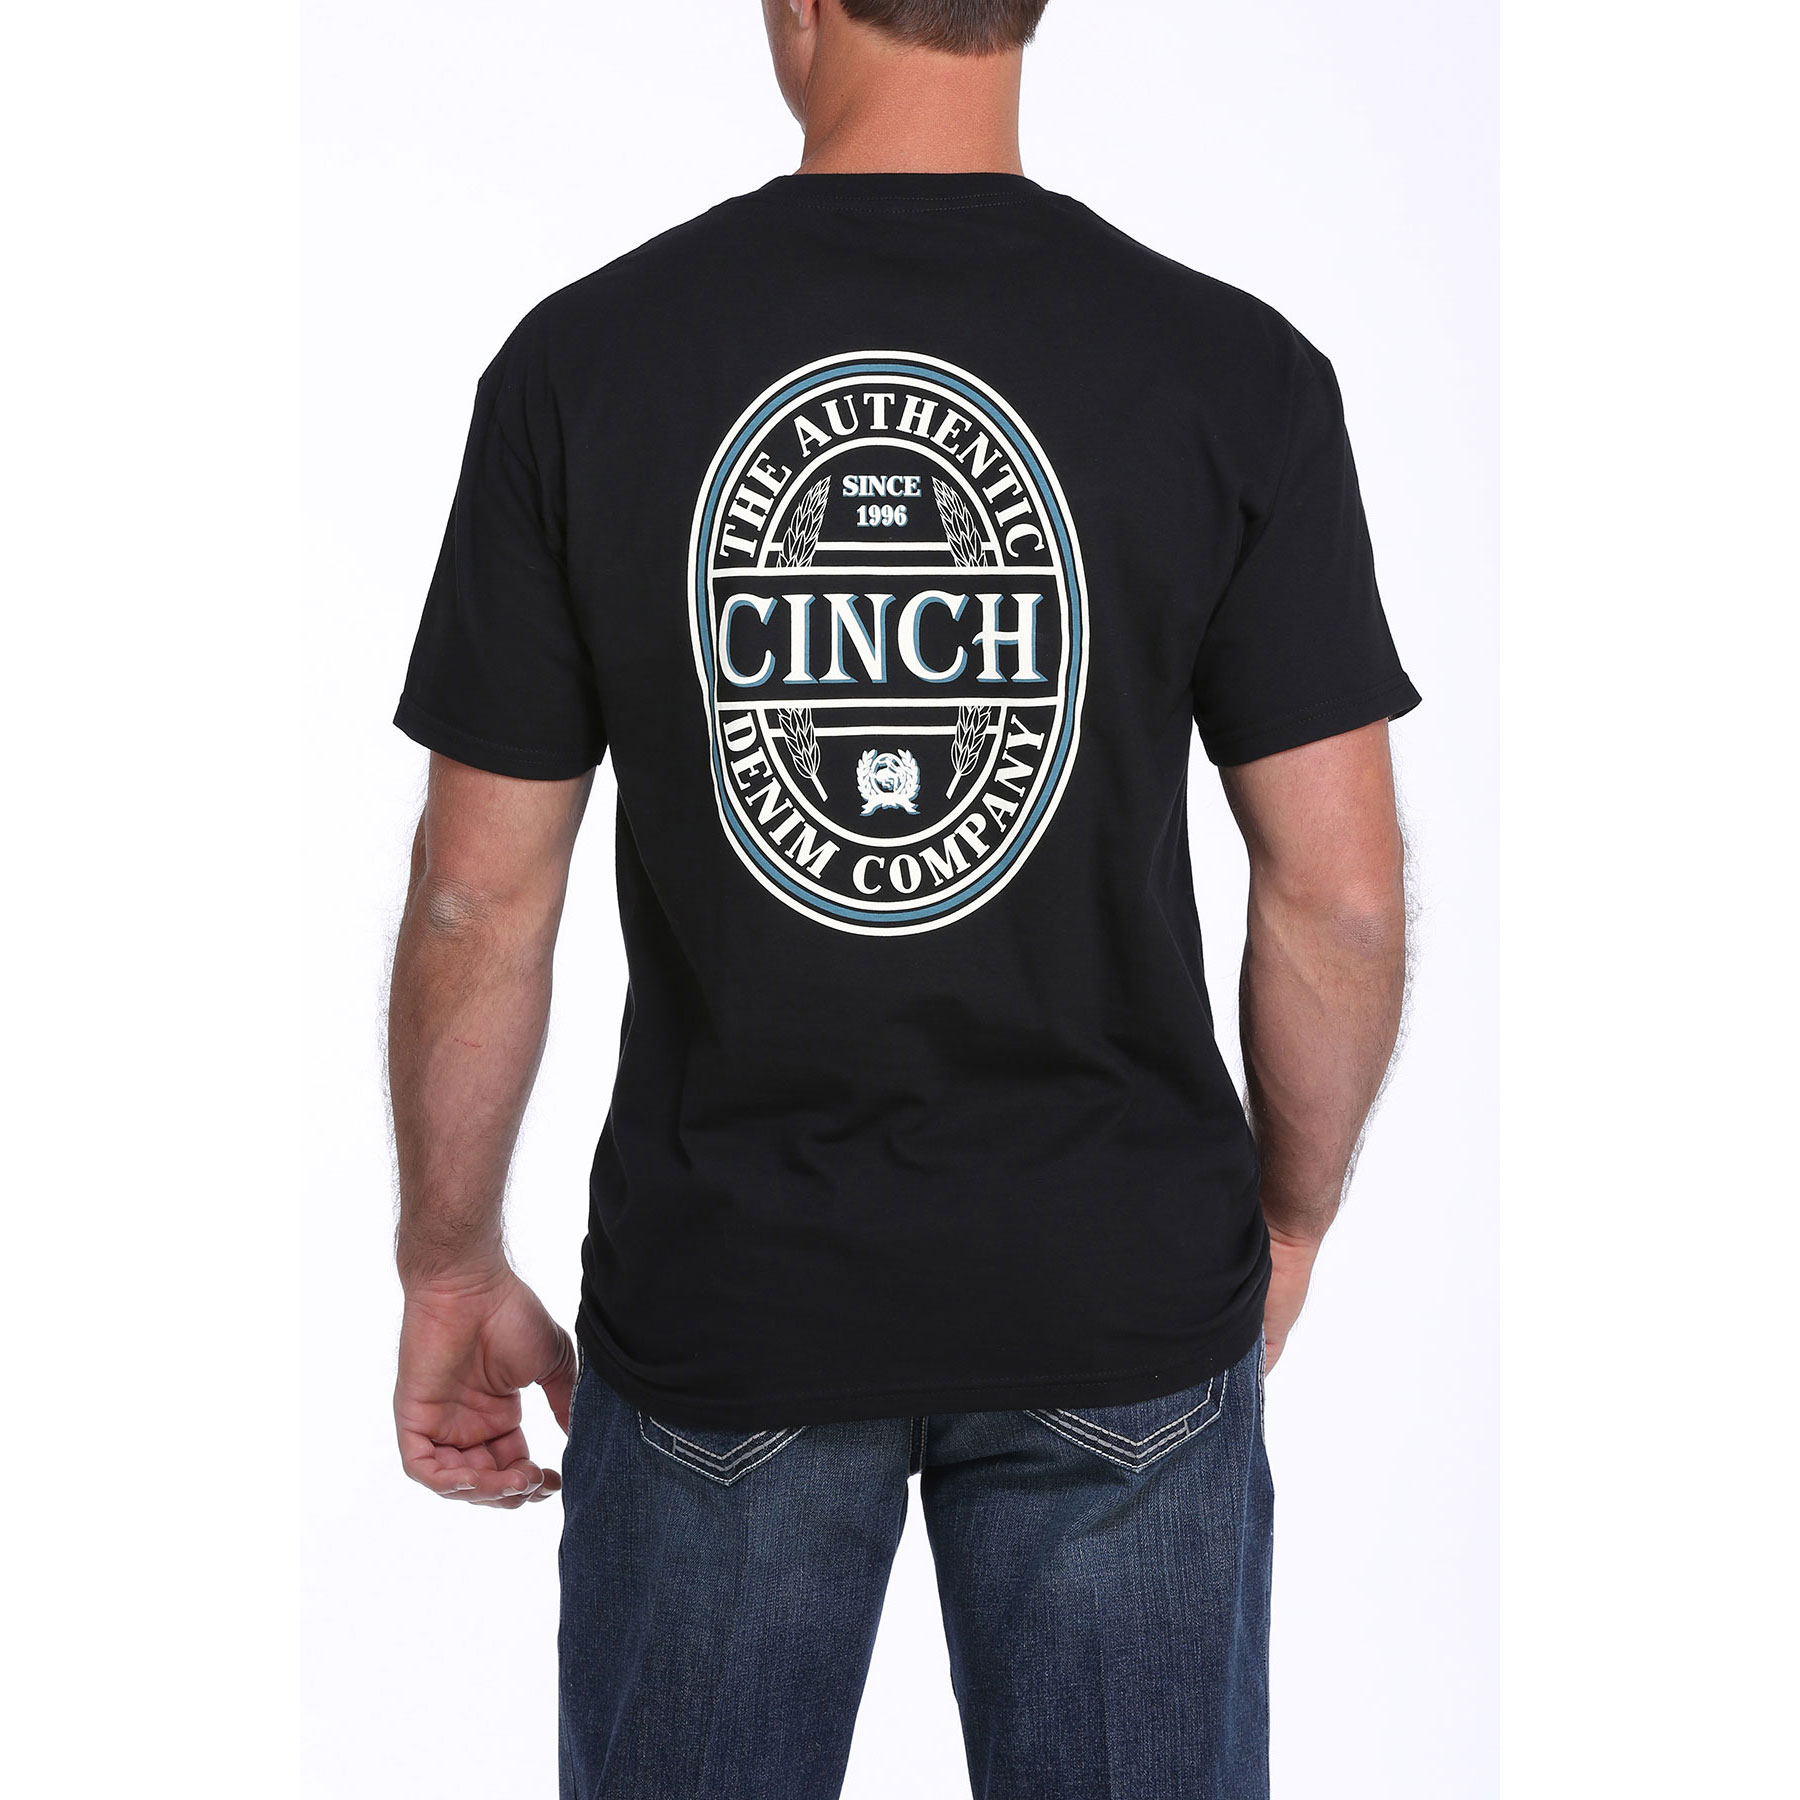 Pungo Ridge - Cinch Men's S/S 8/19 Logo Tee Shirt - Black, Cinch Men's ...